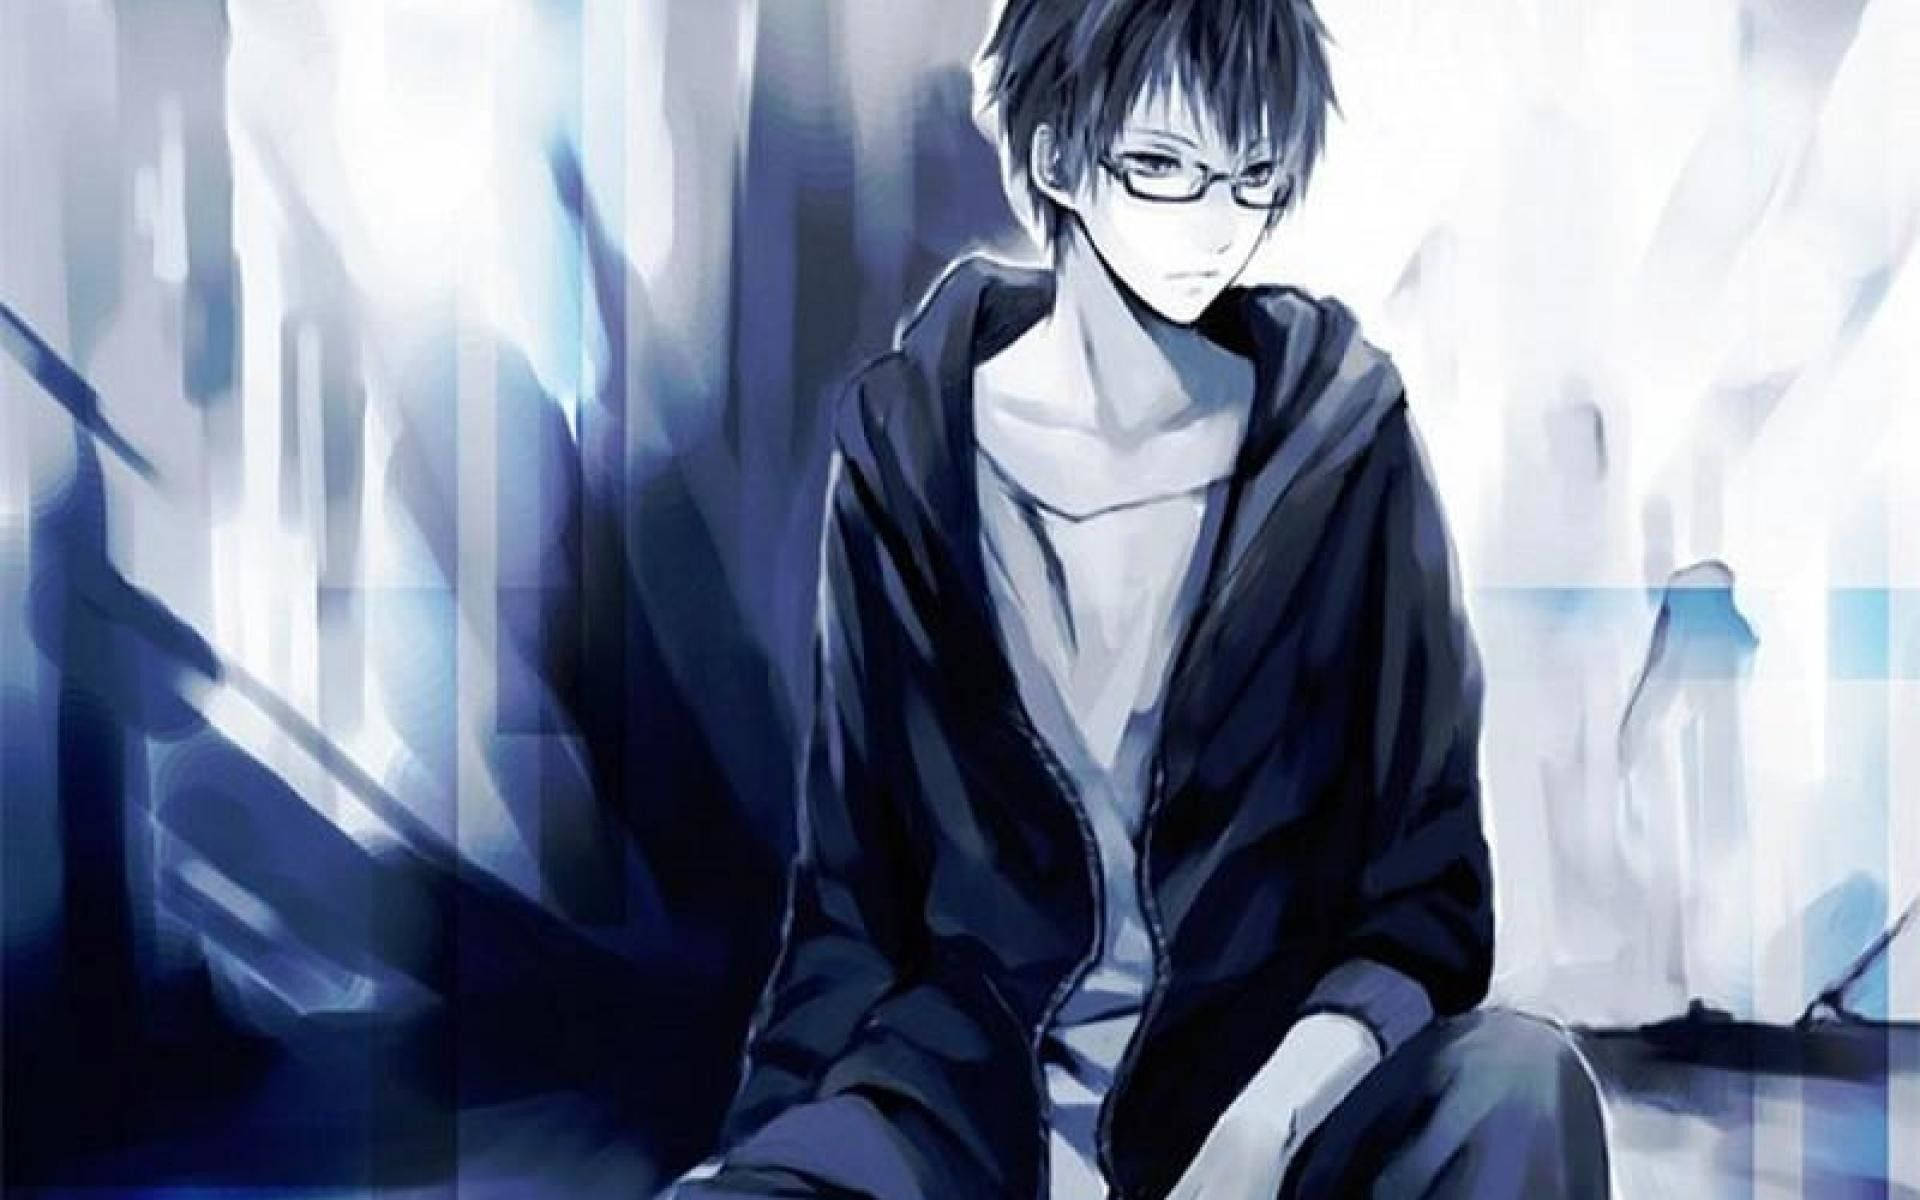 An Anime Boy with Blue Hair Wallpaper